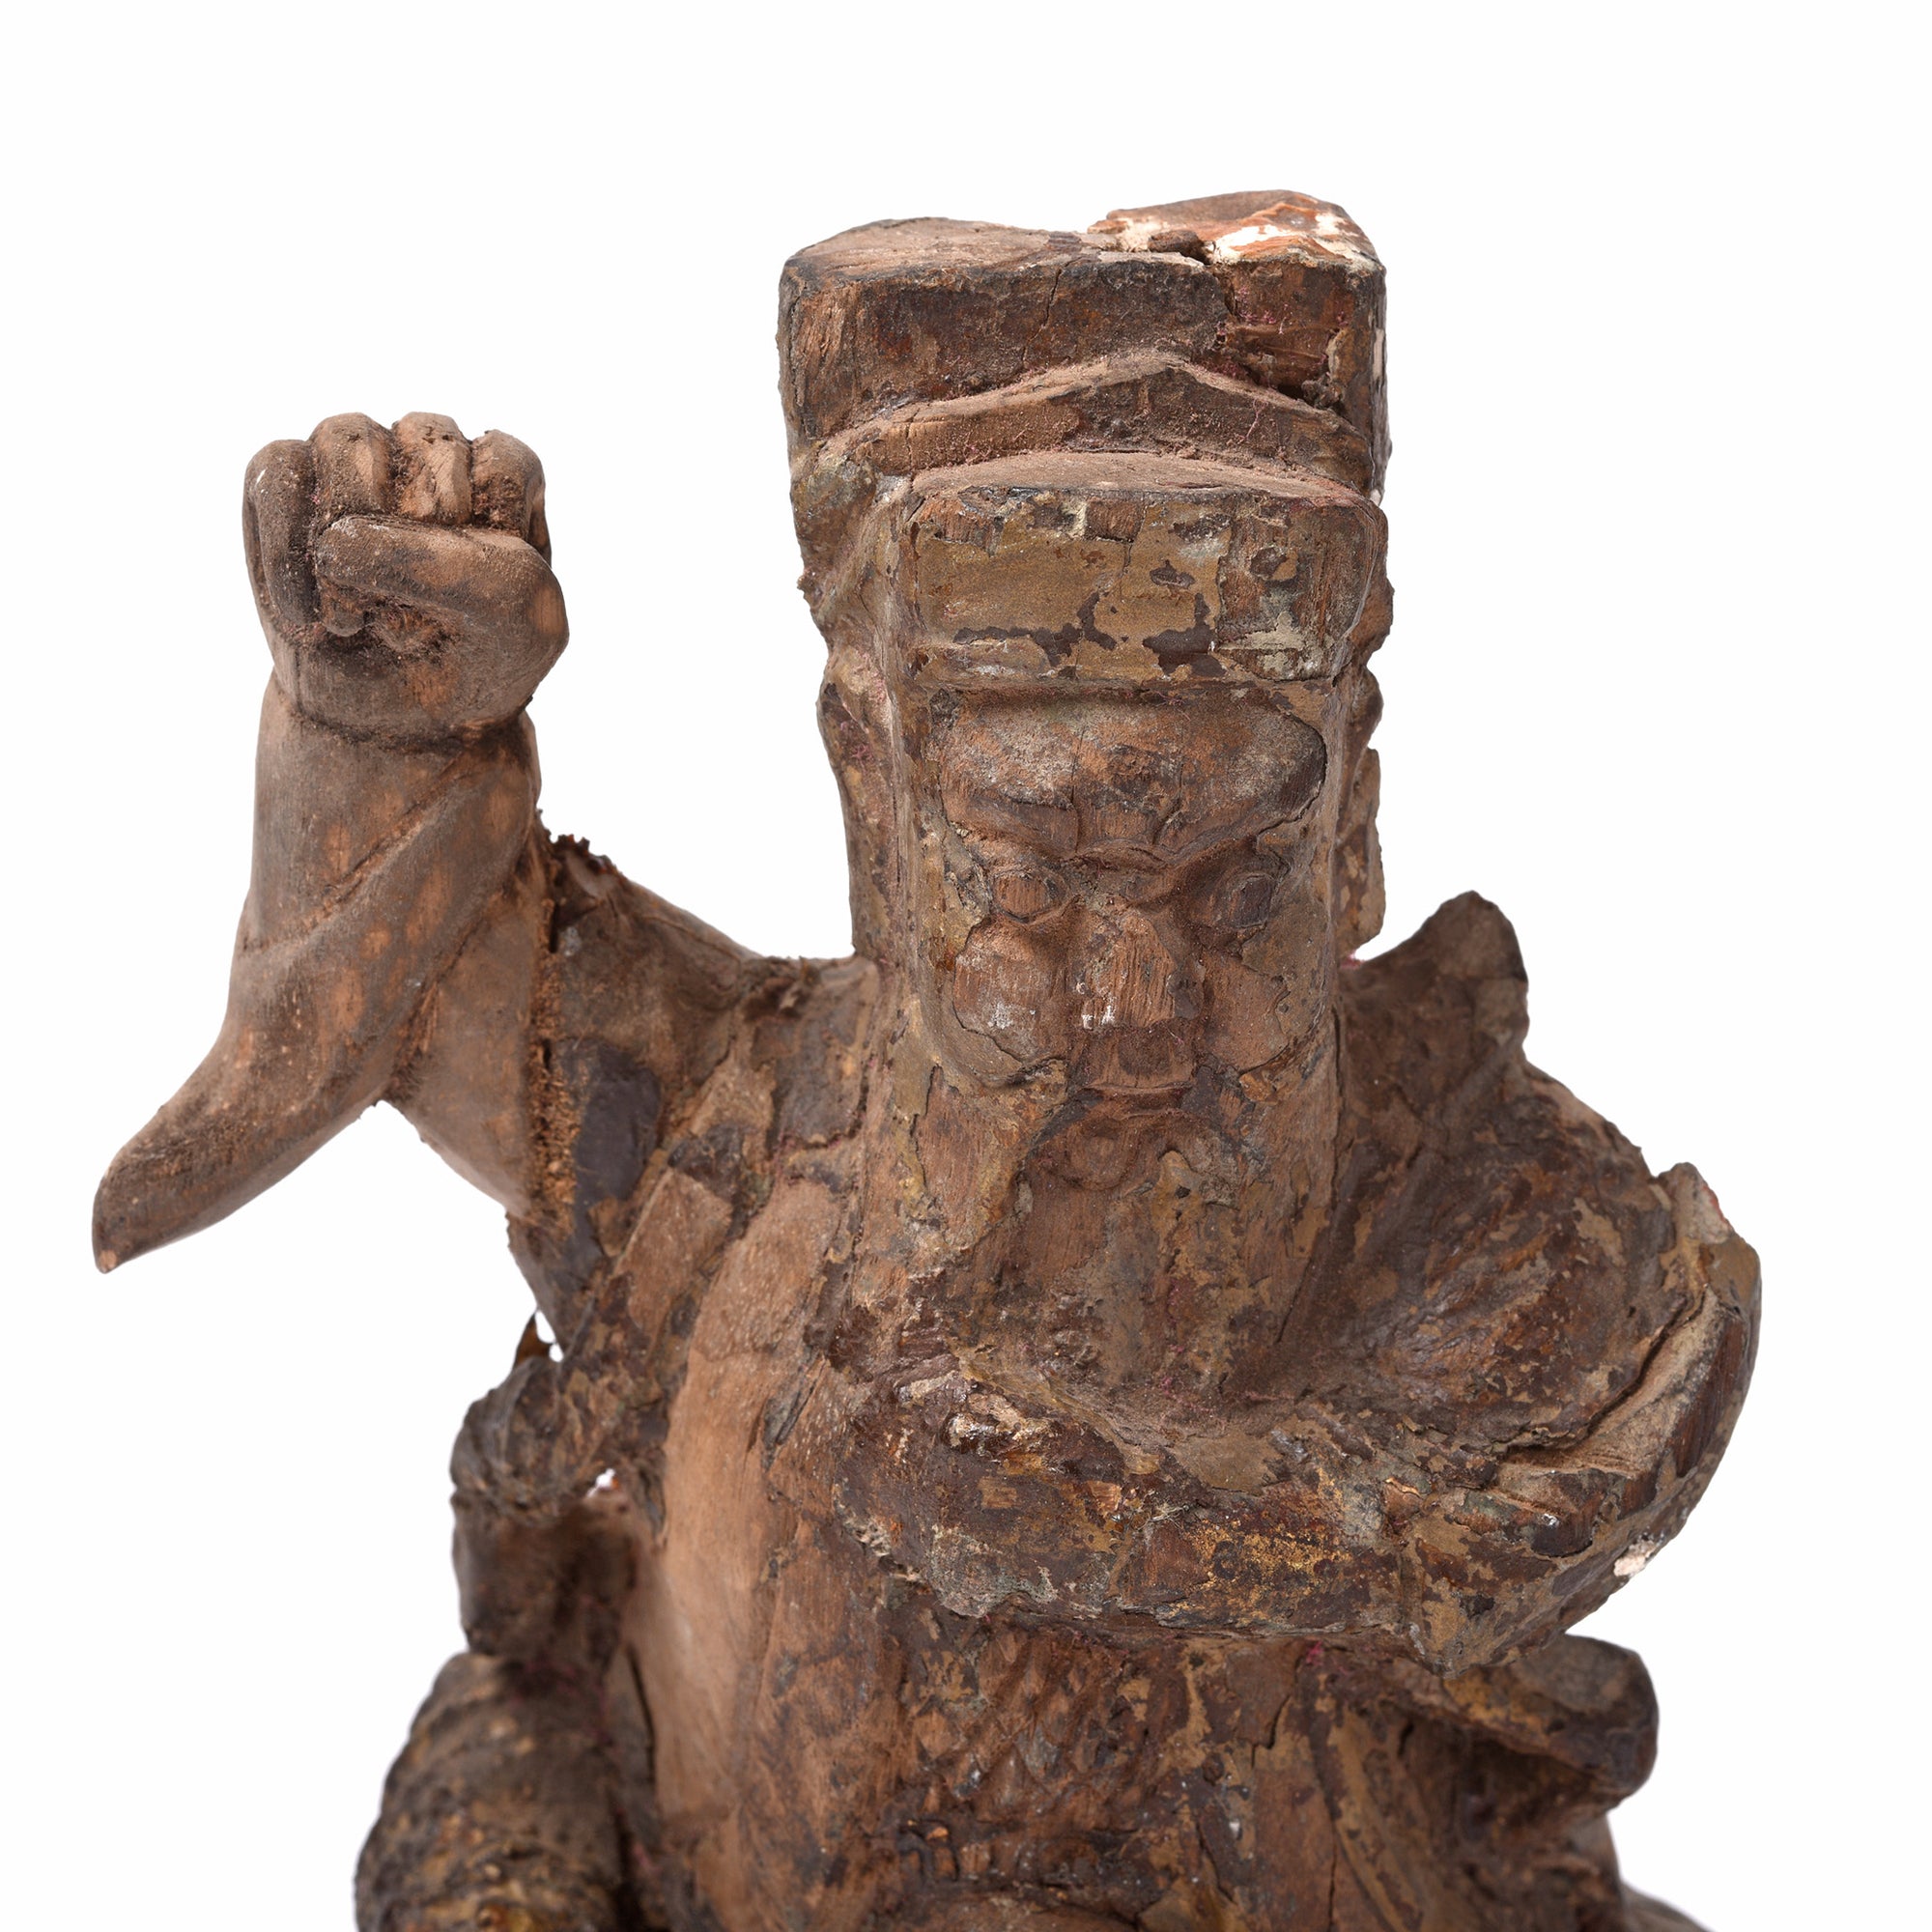 Chinese Immortal or Ancestor Figure - 19thC | Indigo Antiques